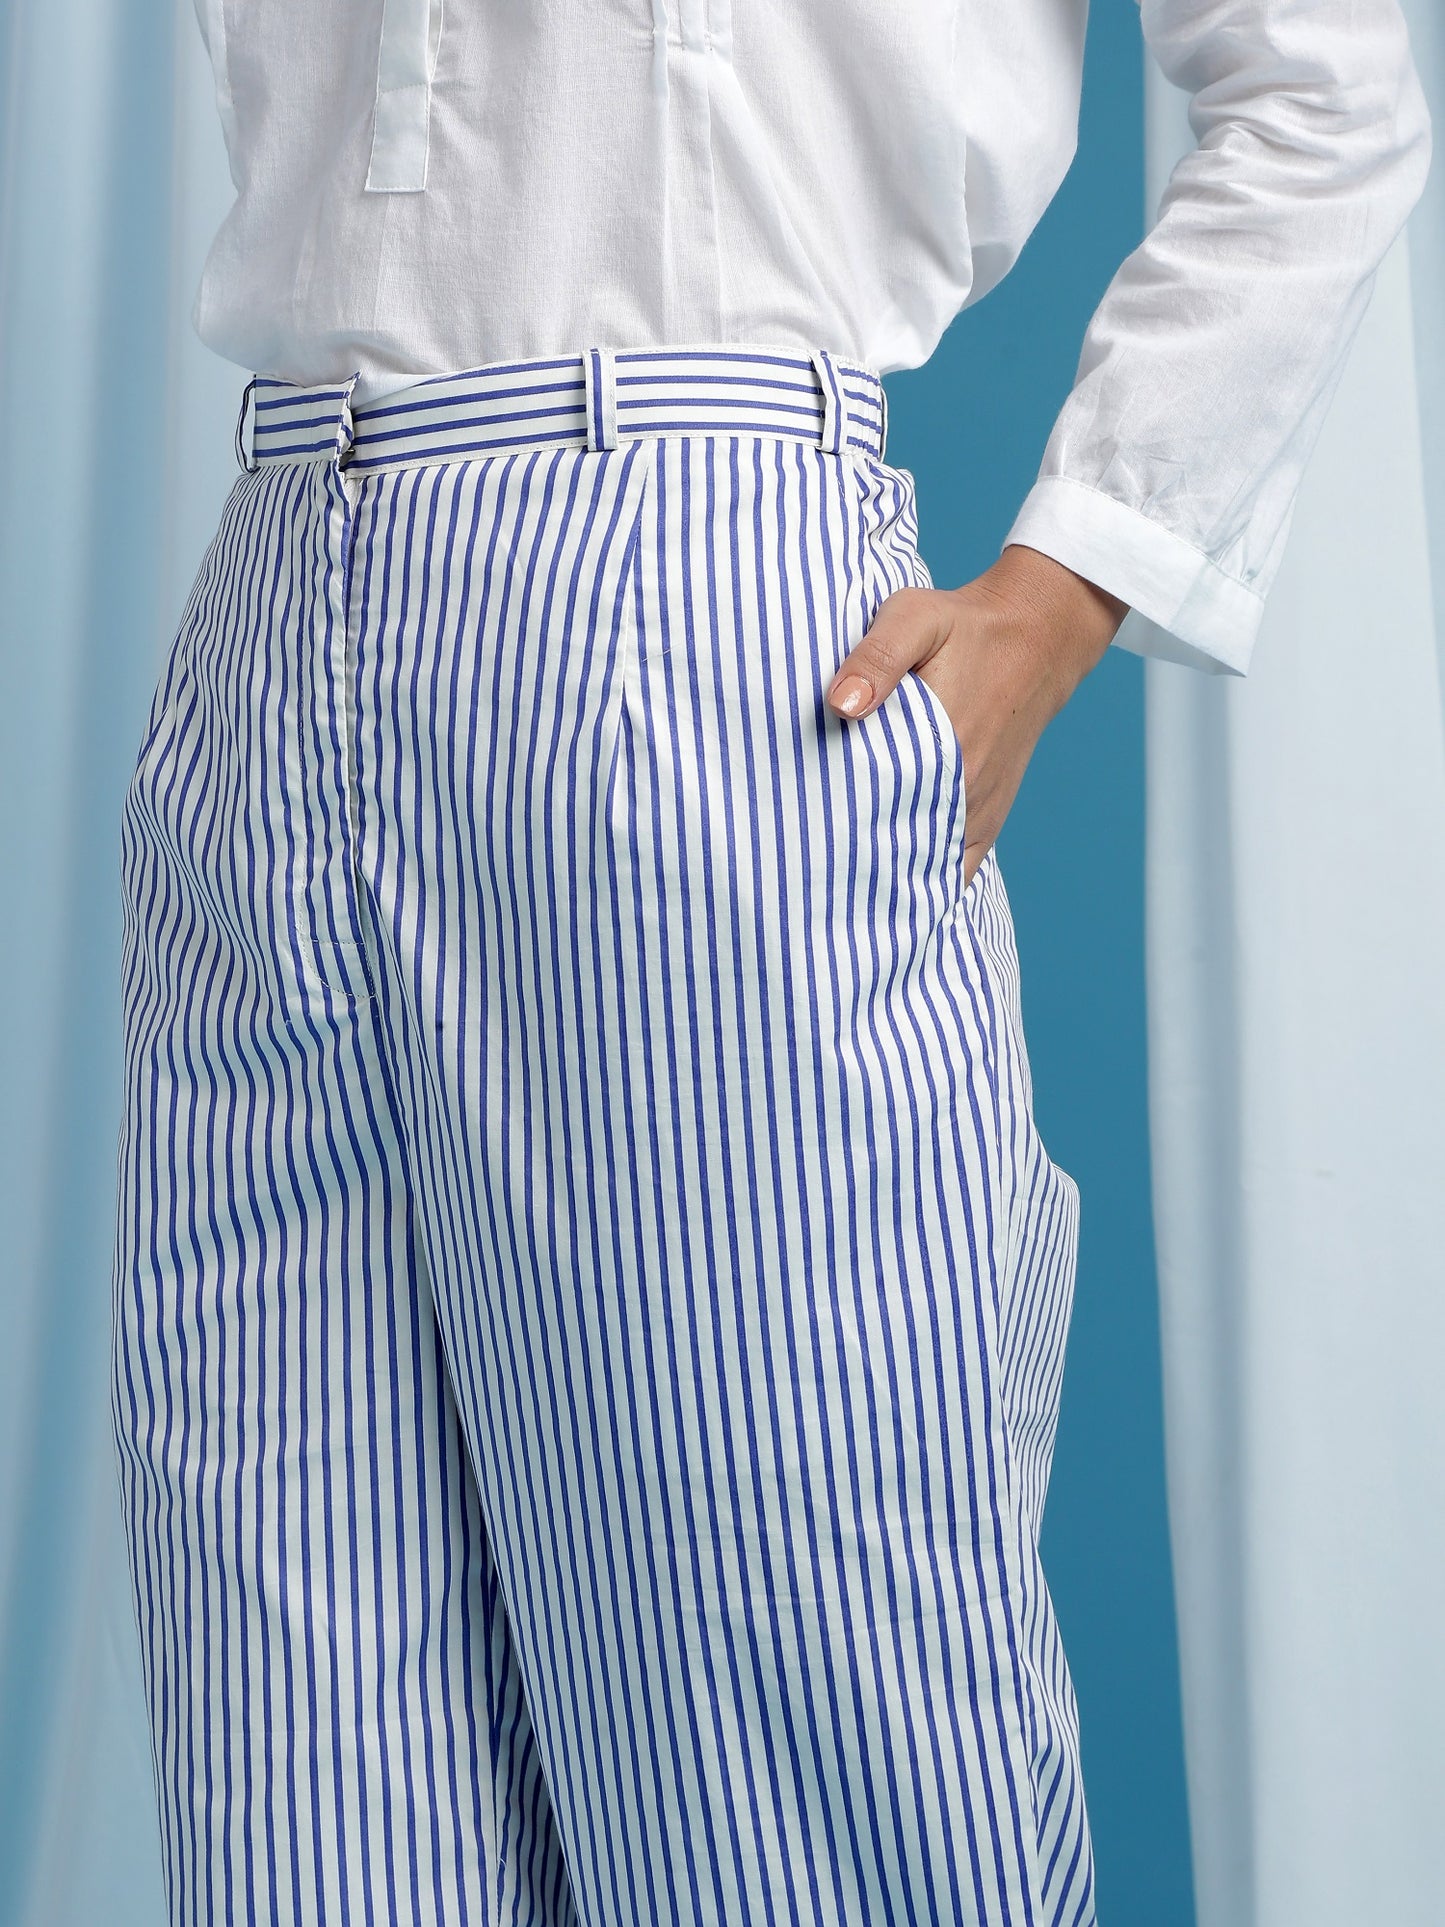 Lorde Stripe Pants - White & Blue Hand Block Printed Cotton Pants